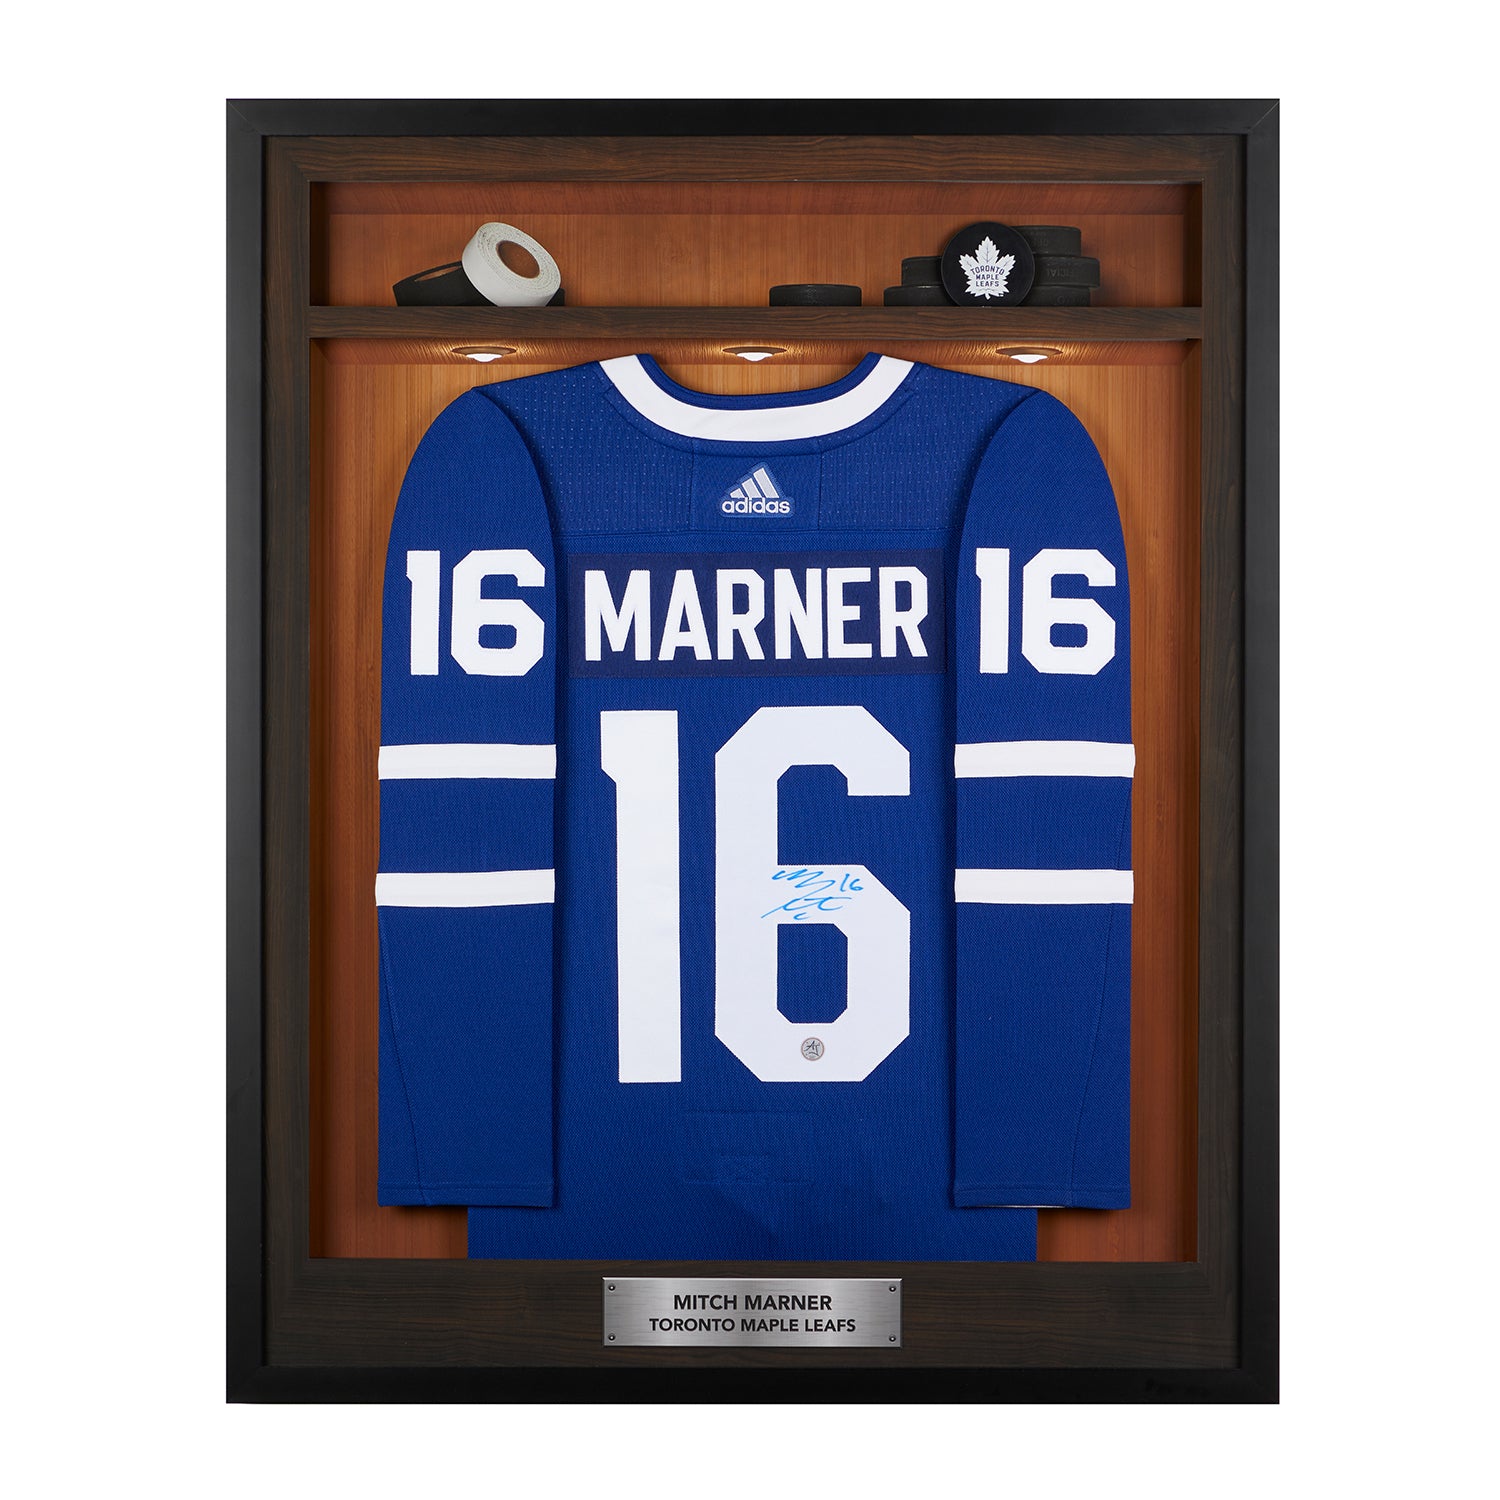 Mitch Marner Toronto Maple Leafs Jersey black